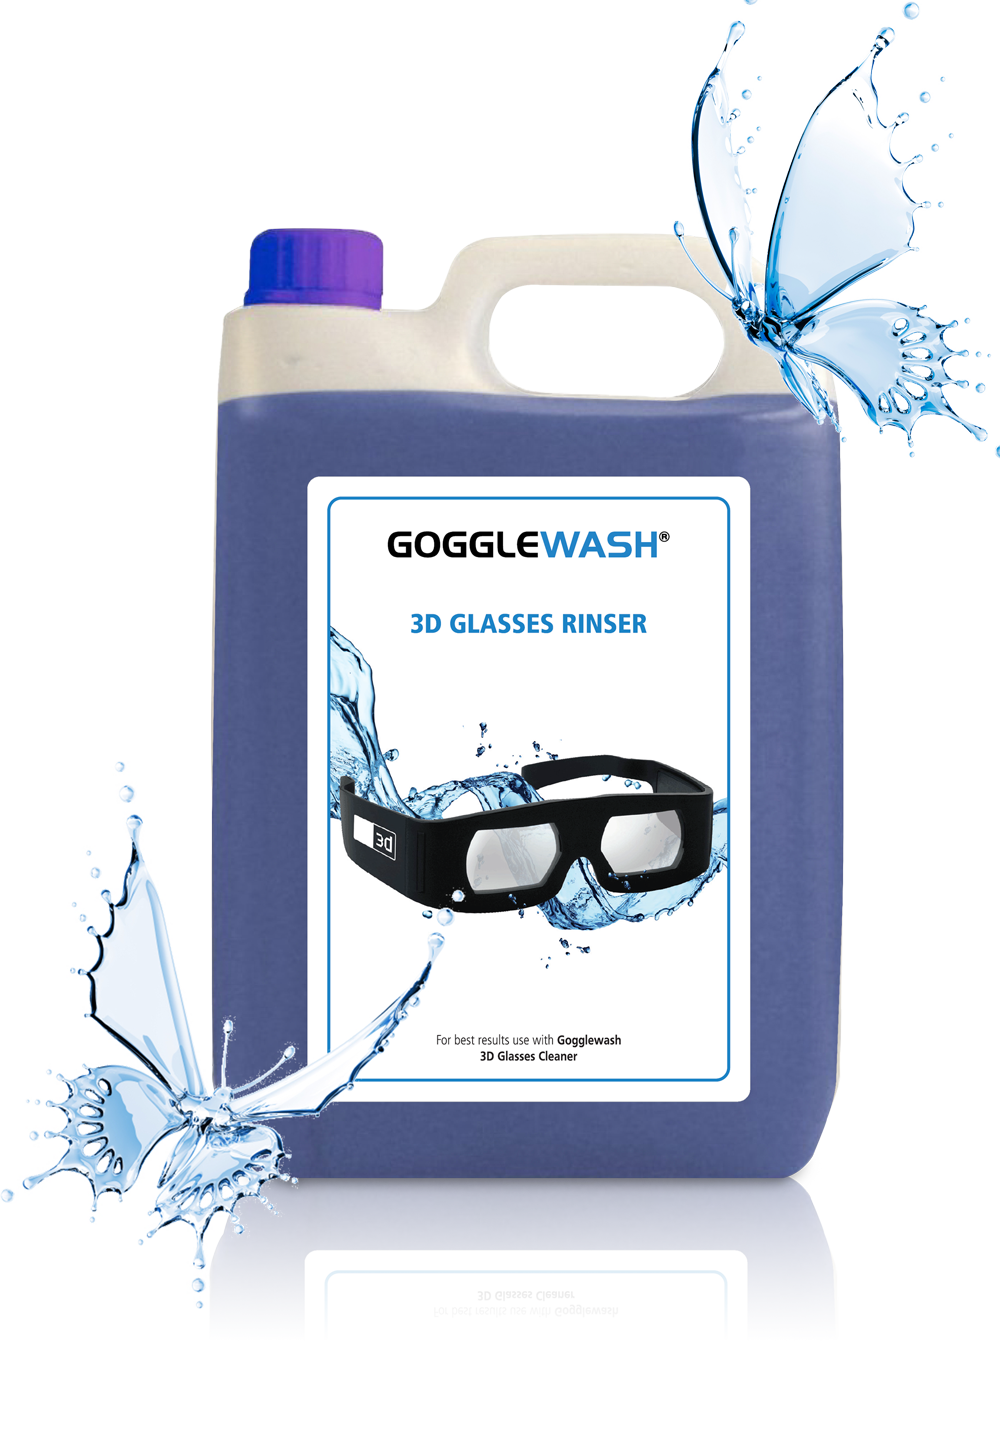 Clenaware Systems  - 3D Glasses Rinser - Gogglewash